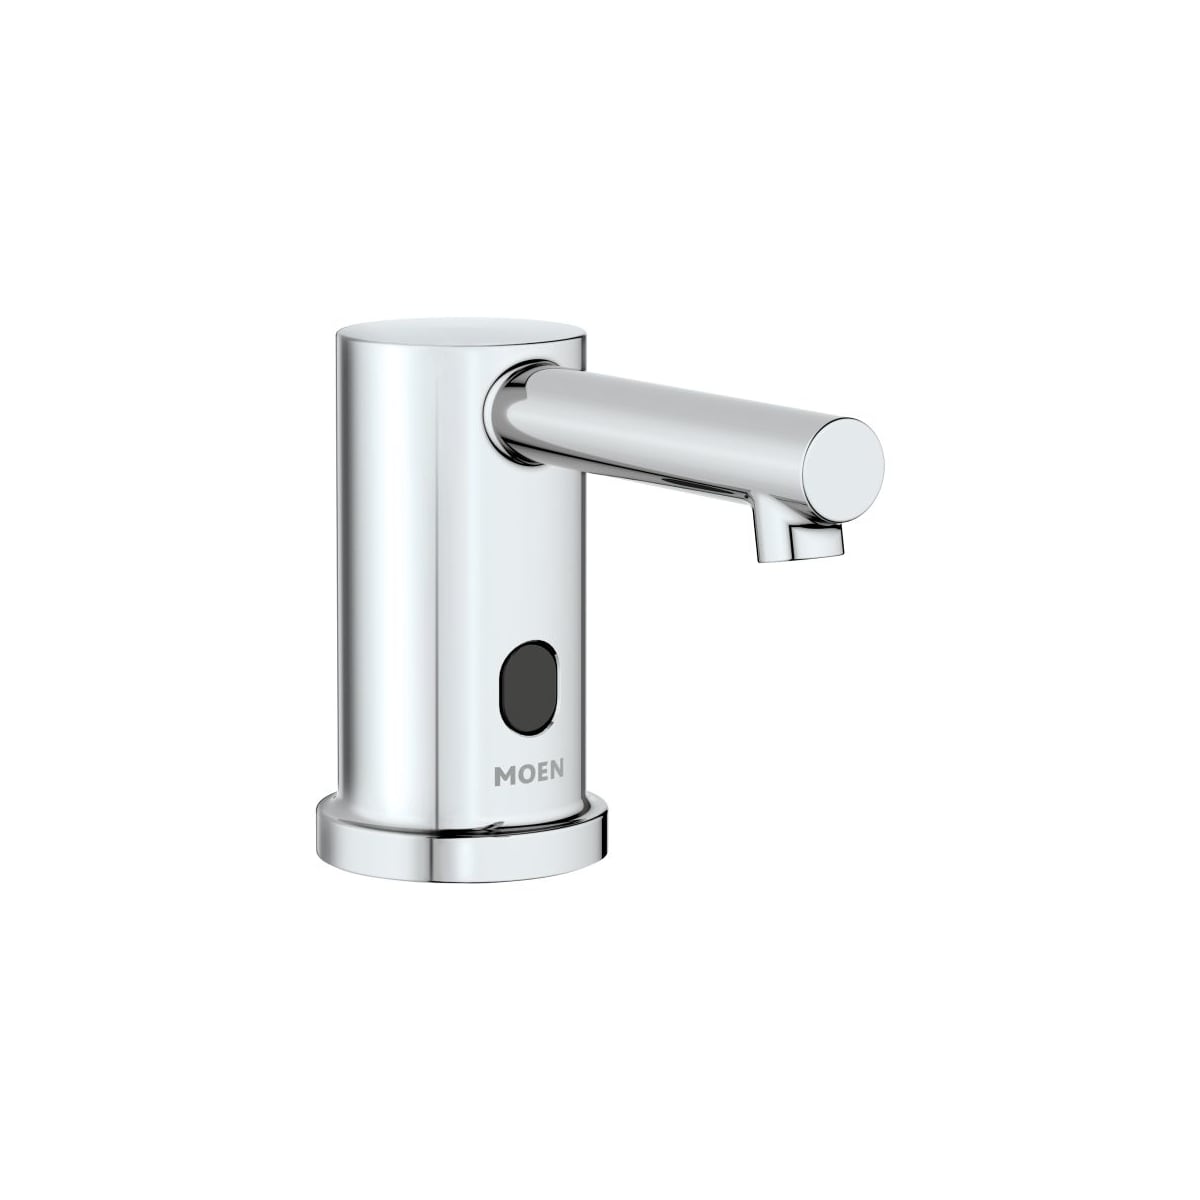 Moen 8560 Chrome M Power Electronic Touchless Soap Dispenser Faucetdirect Com